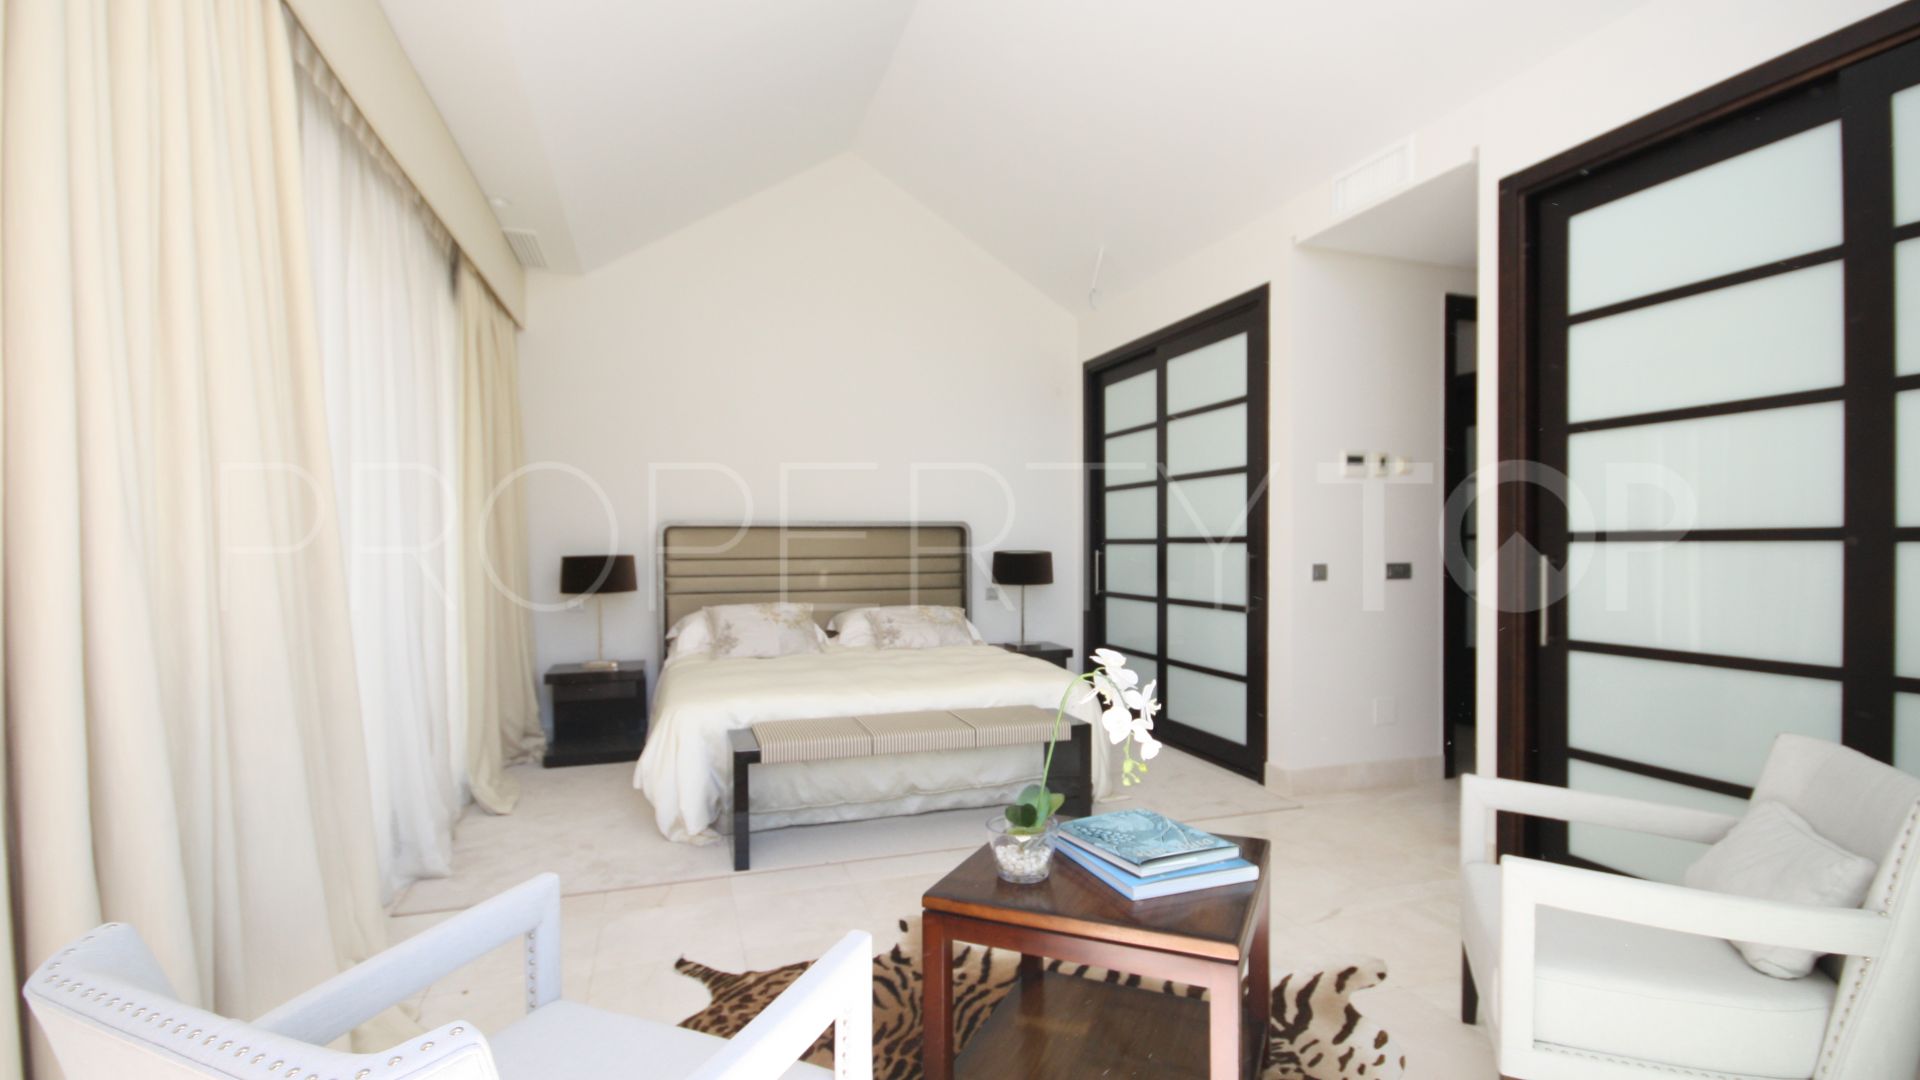 3 bedrooms apartment in Hacienda de Valderrama for sale